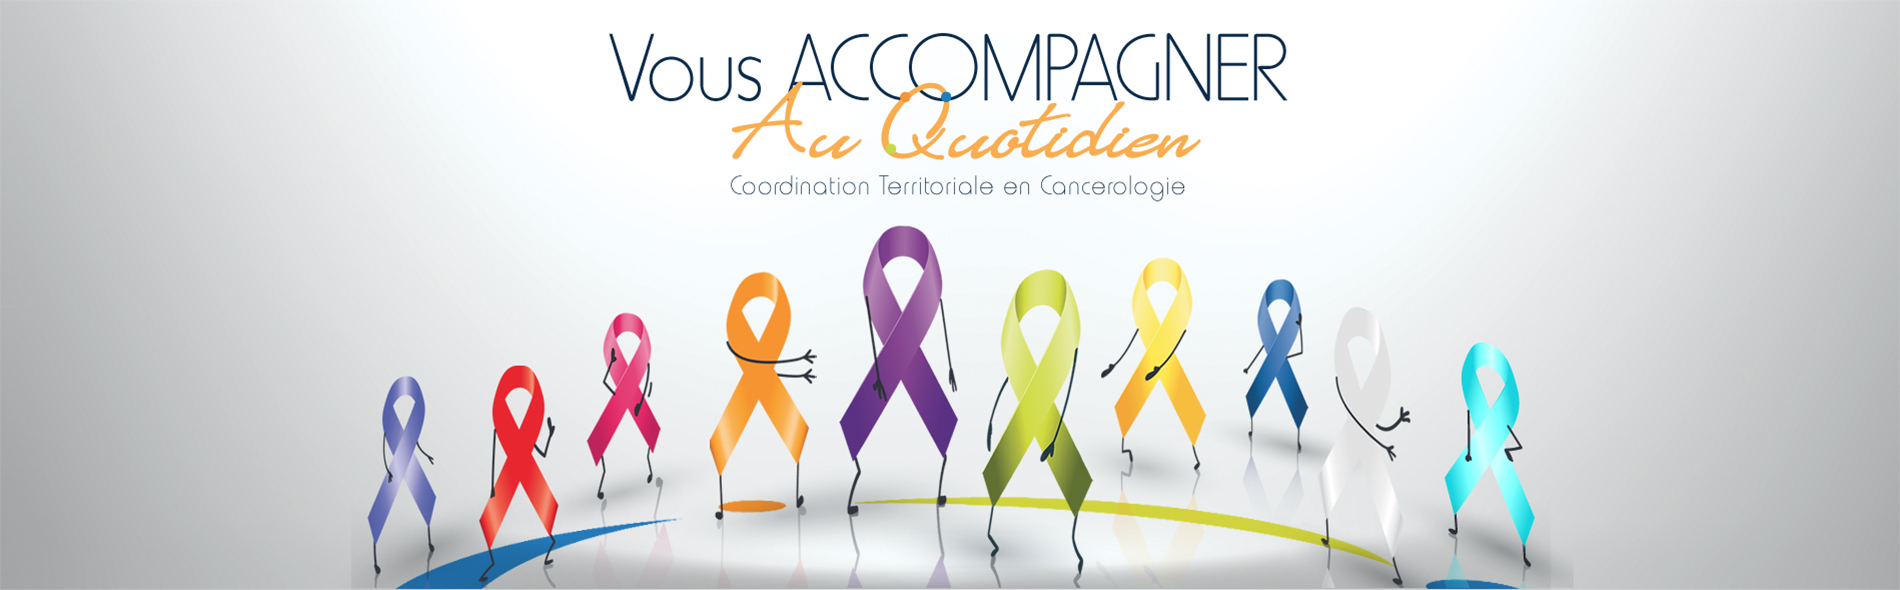 Association Coordination Territoriale Cancérologie bandeau image